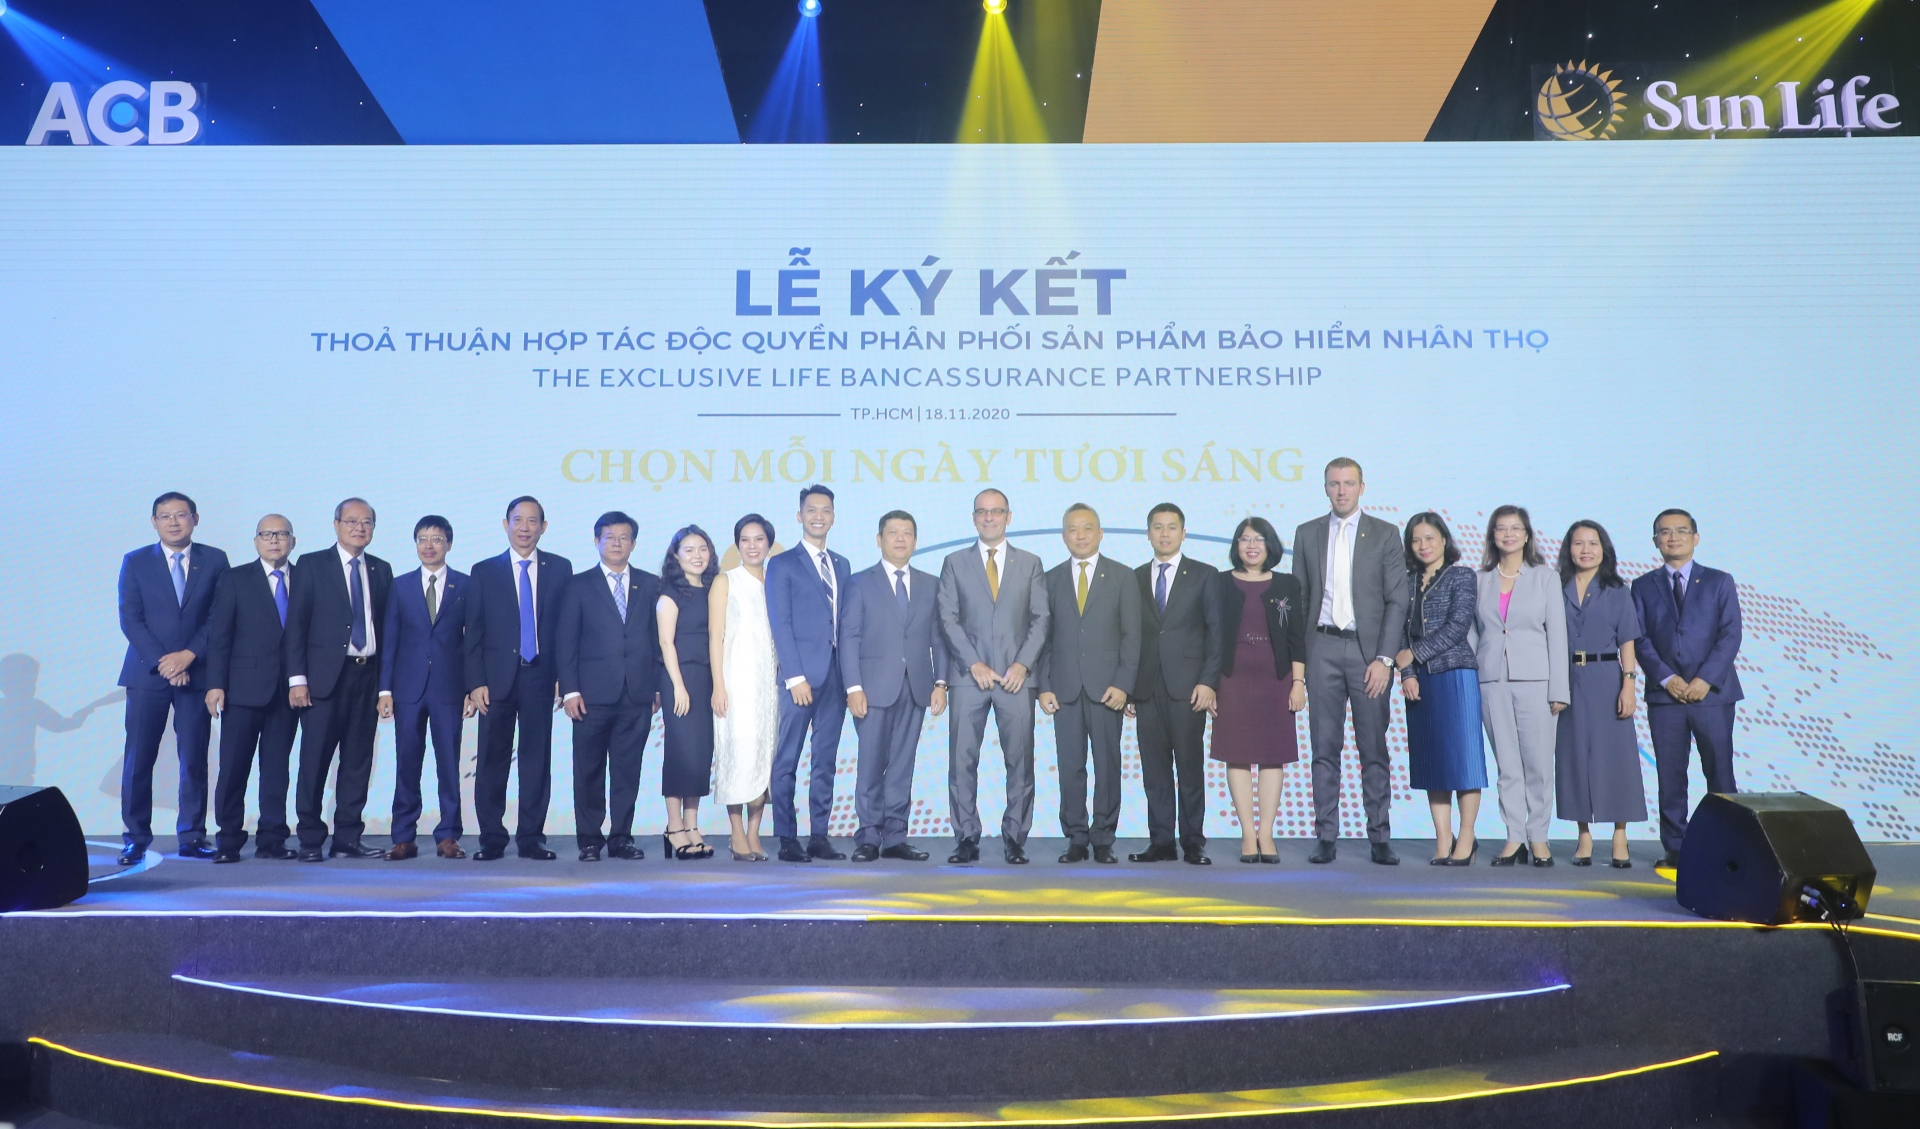 ACB and Sun Life Vietnam announce exclusive bancassurance partnership